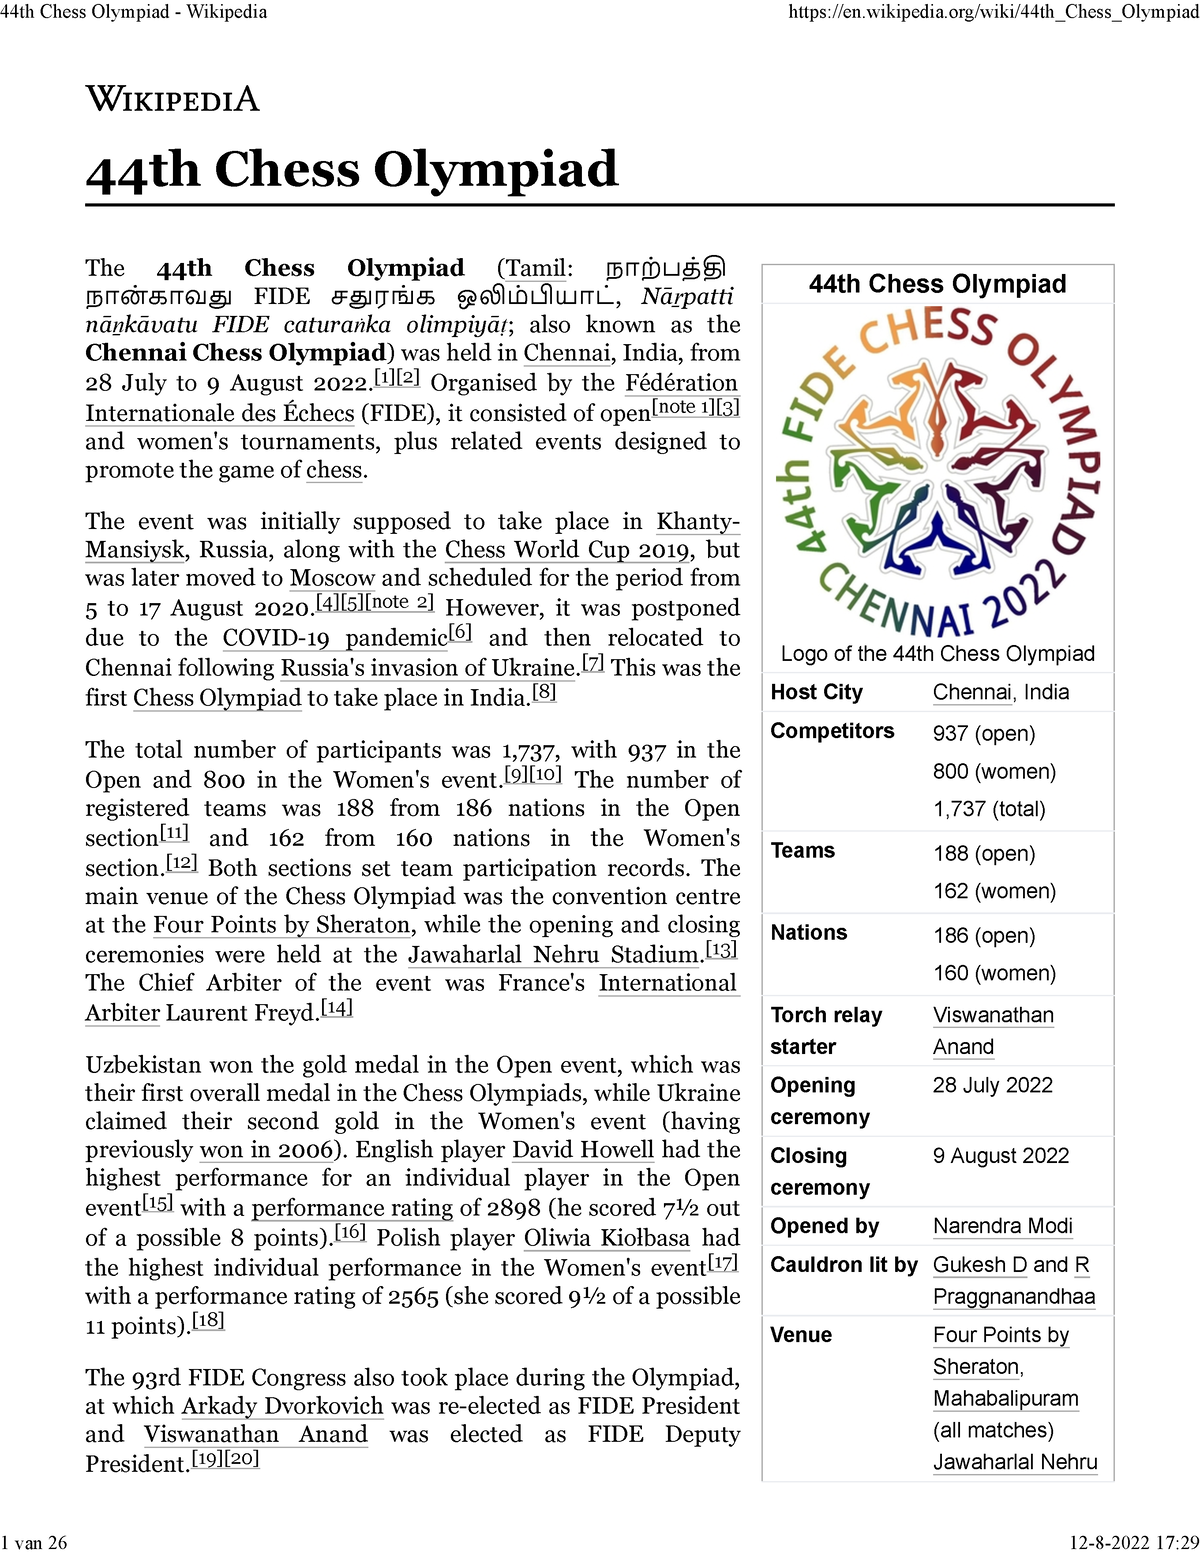 FIDE August 2023 rating list: Gukesh, Le Quang Liem and